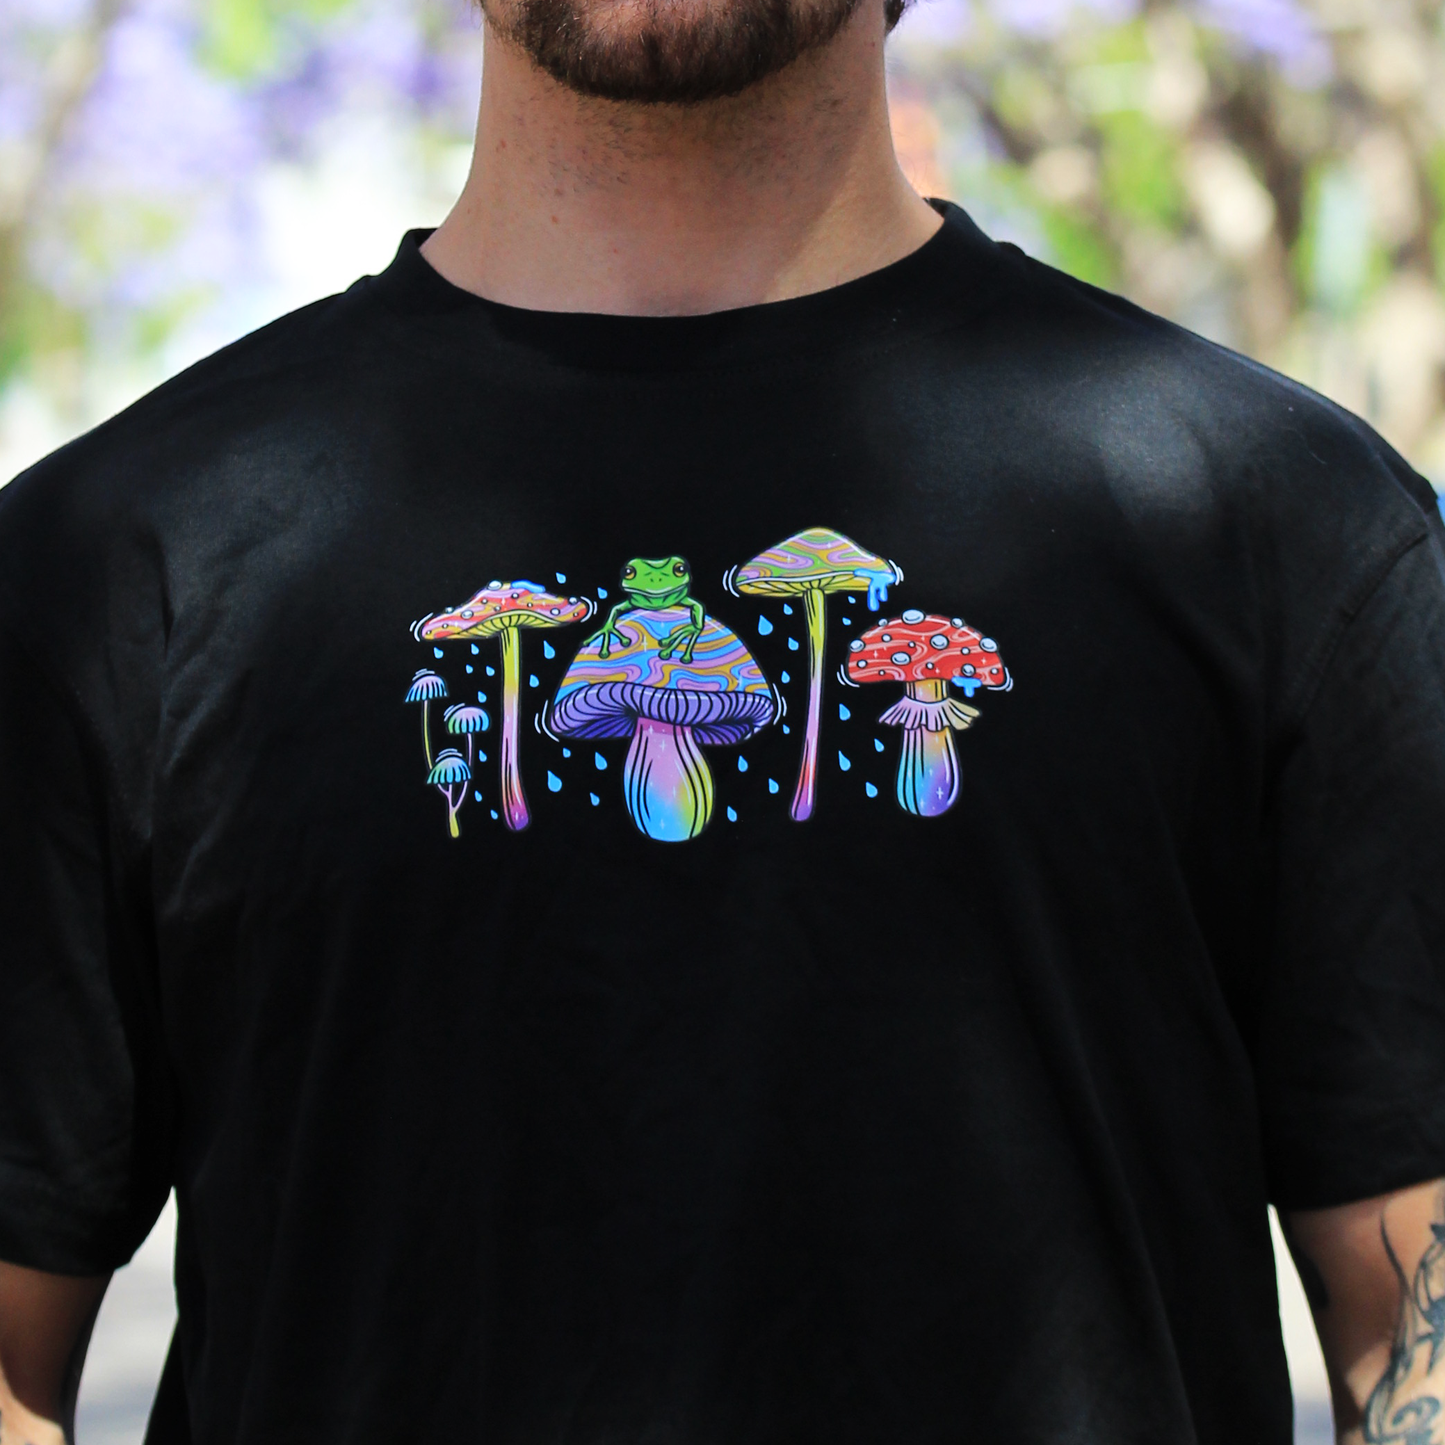 The Frog and Mushrooms Short Sleeve Black Tshirt